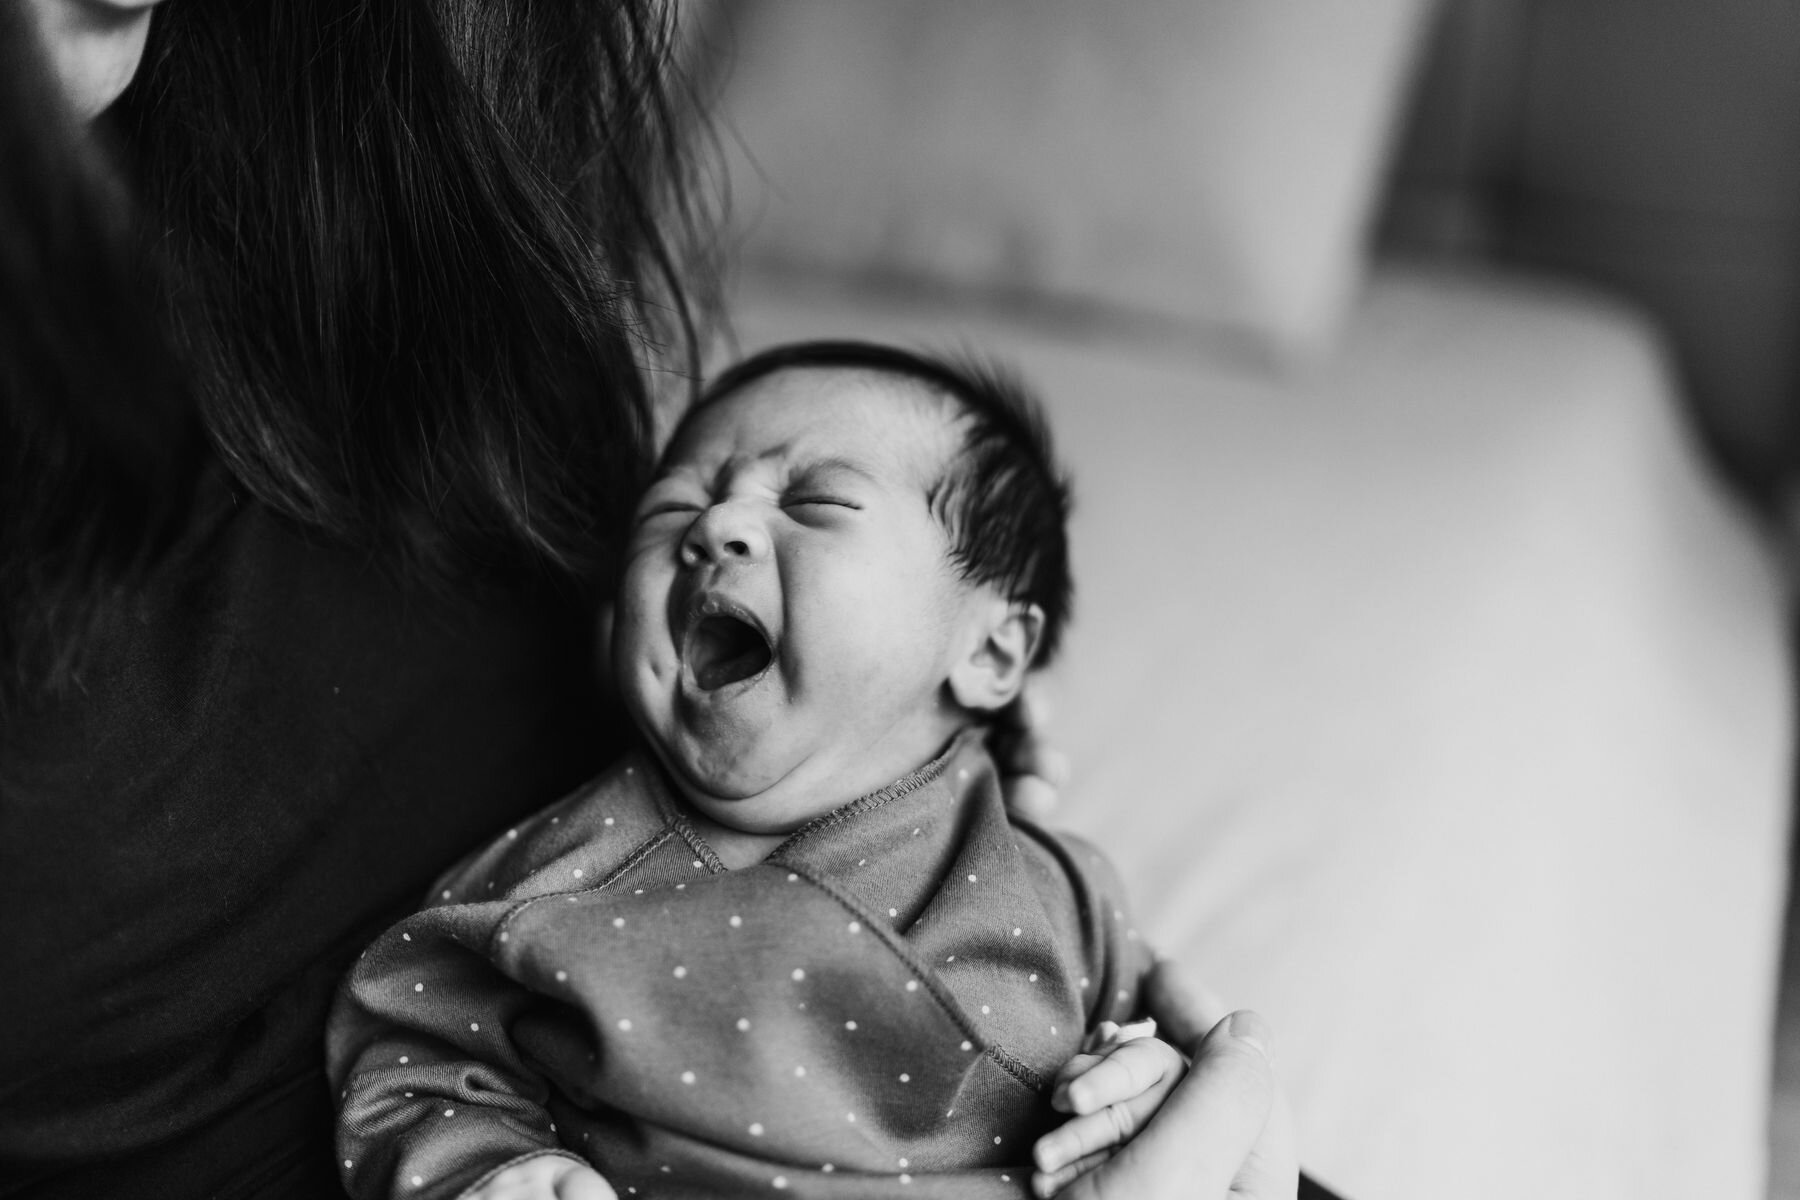 Seattle newborn baby girl yawn